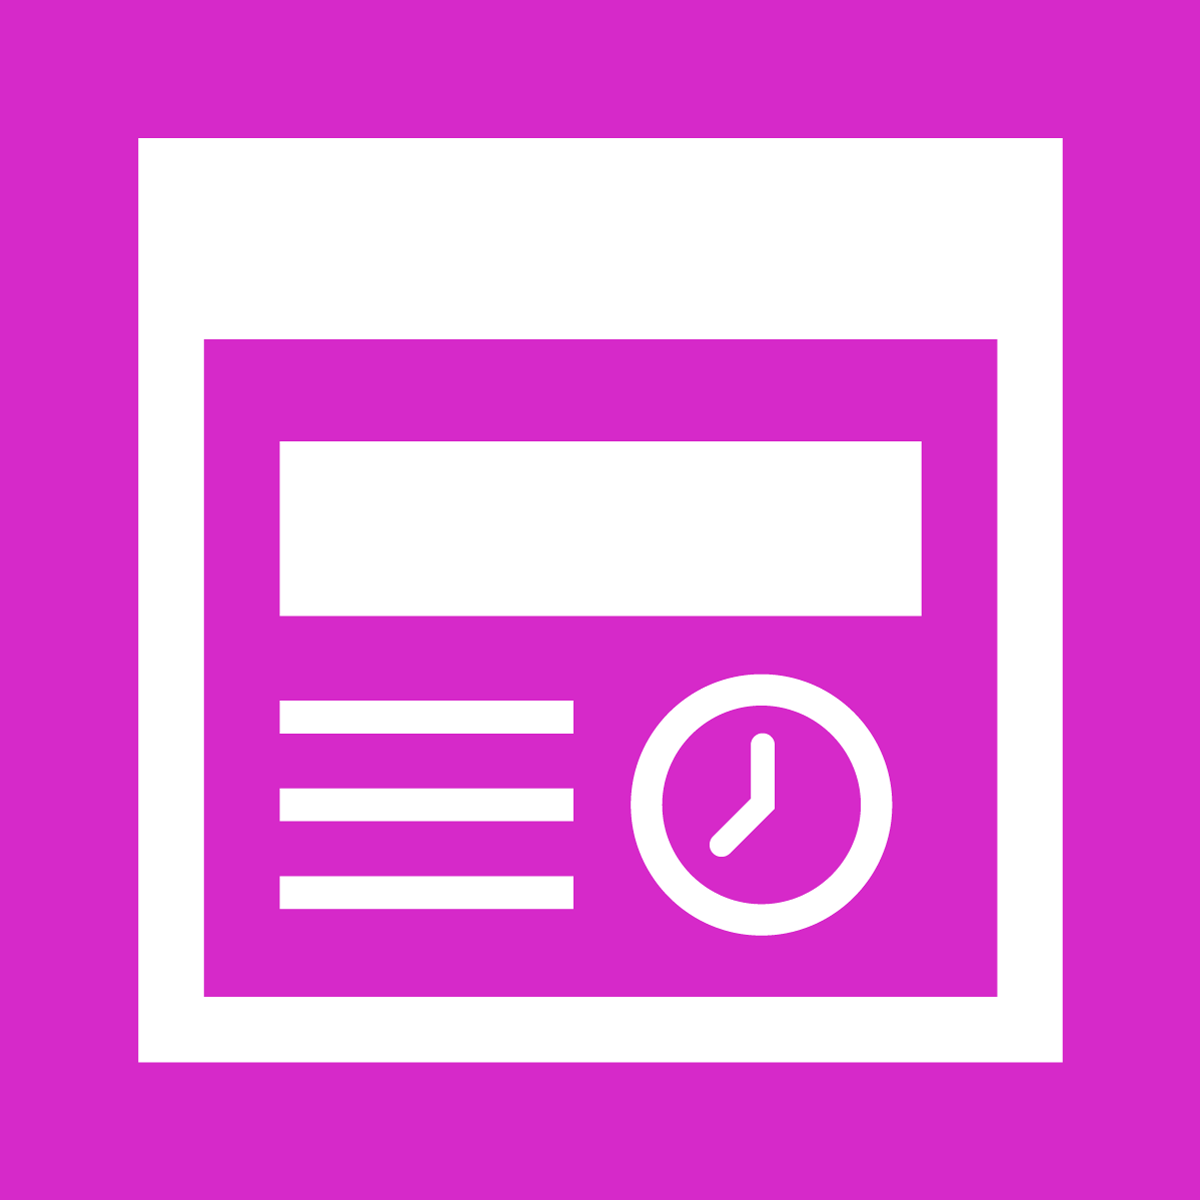 PagePace | 블로그 읽기 시간 계산기